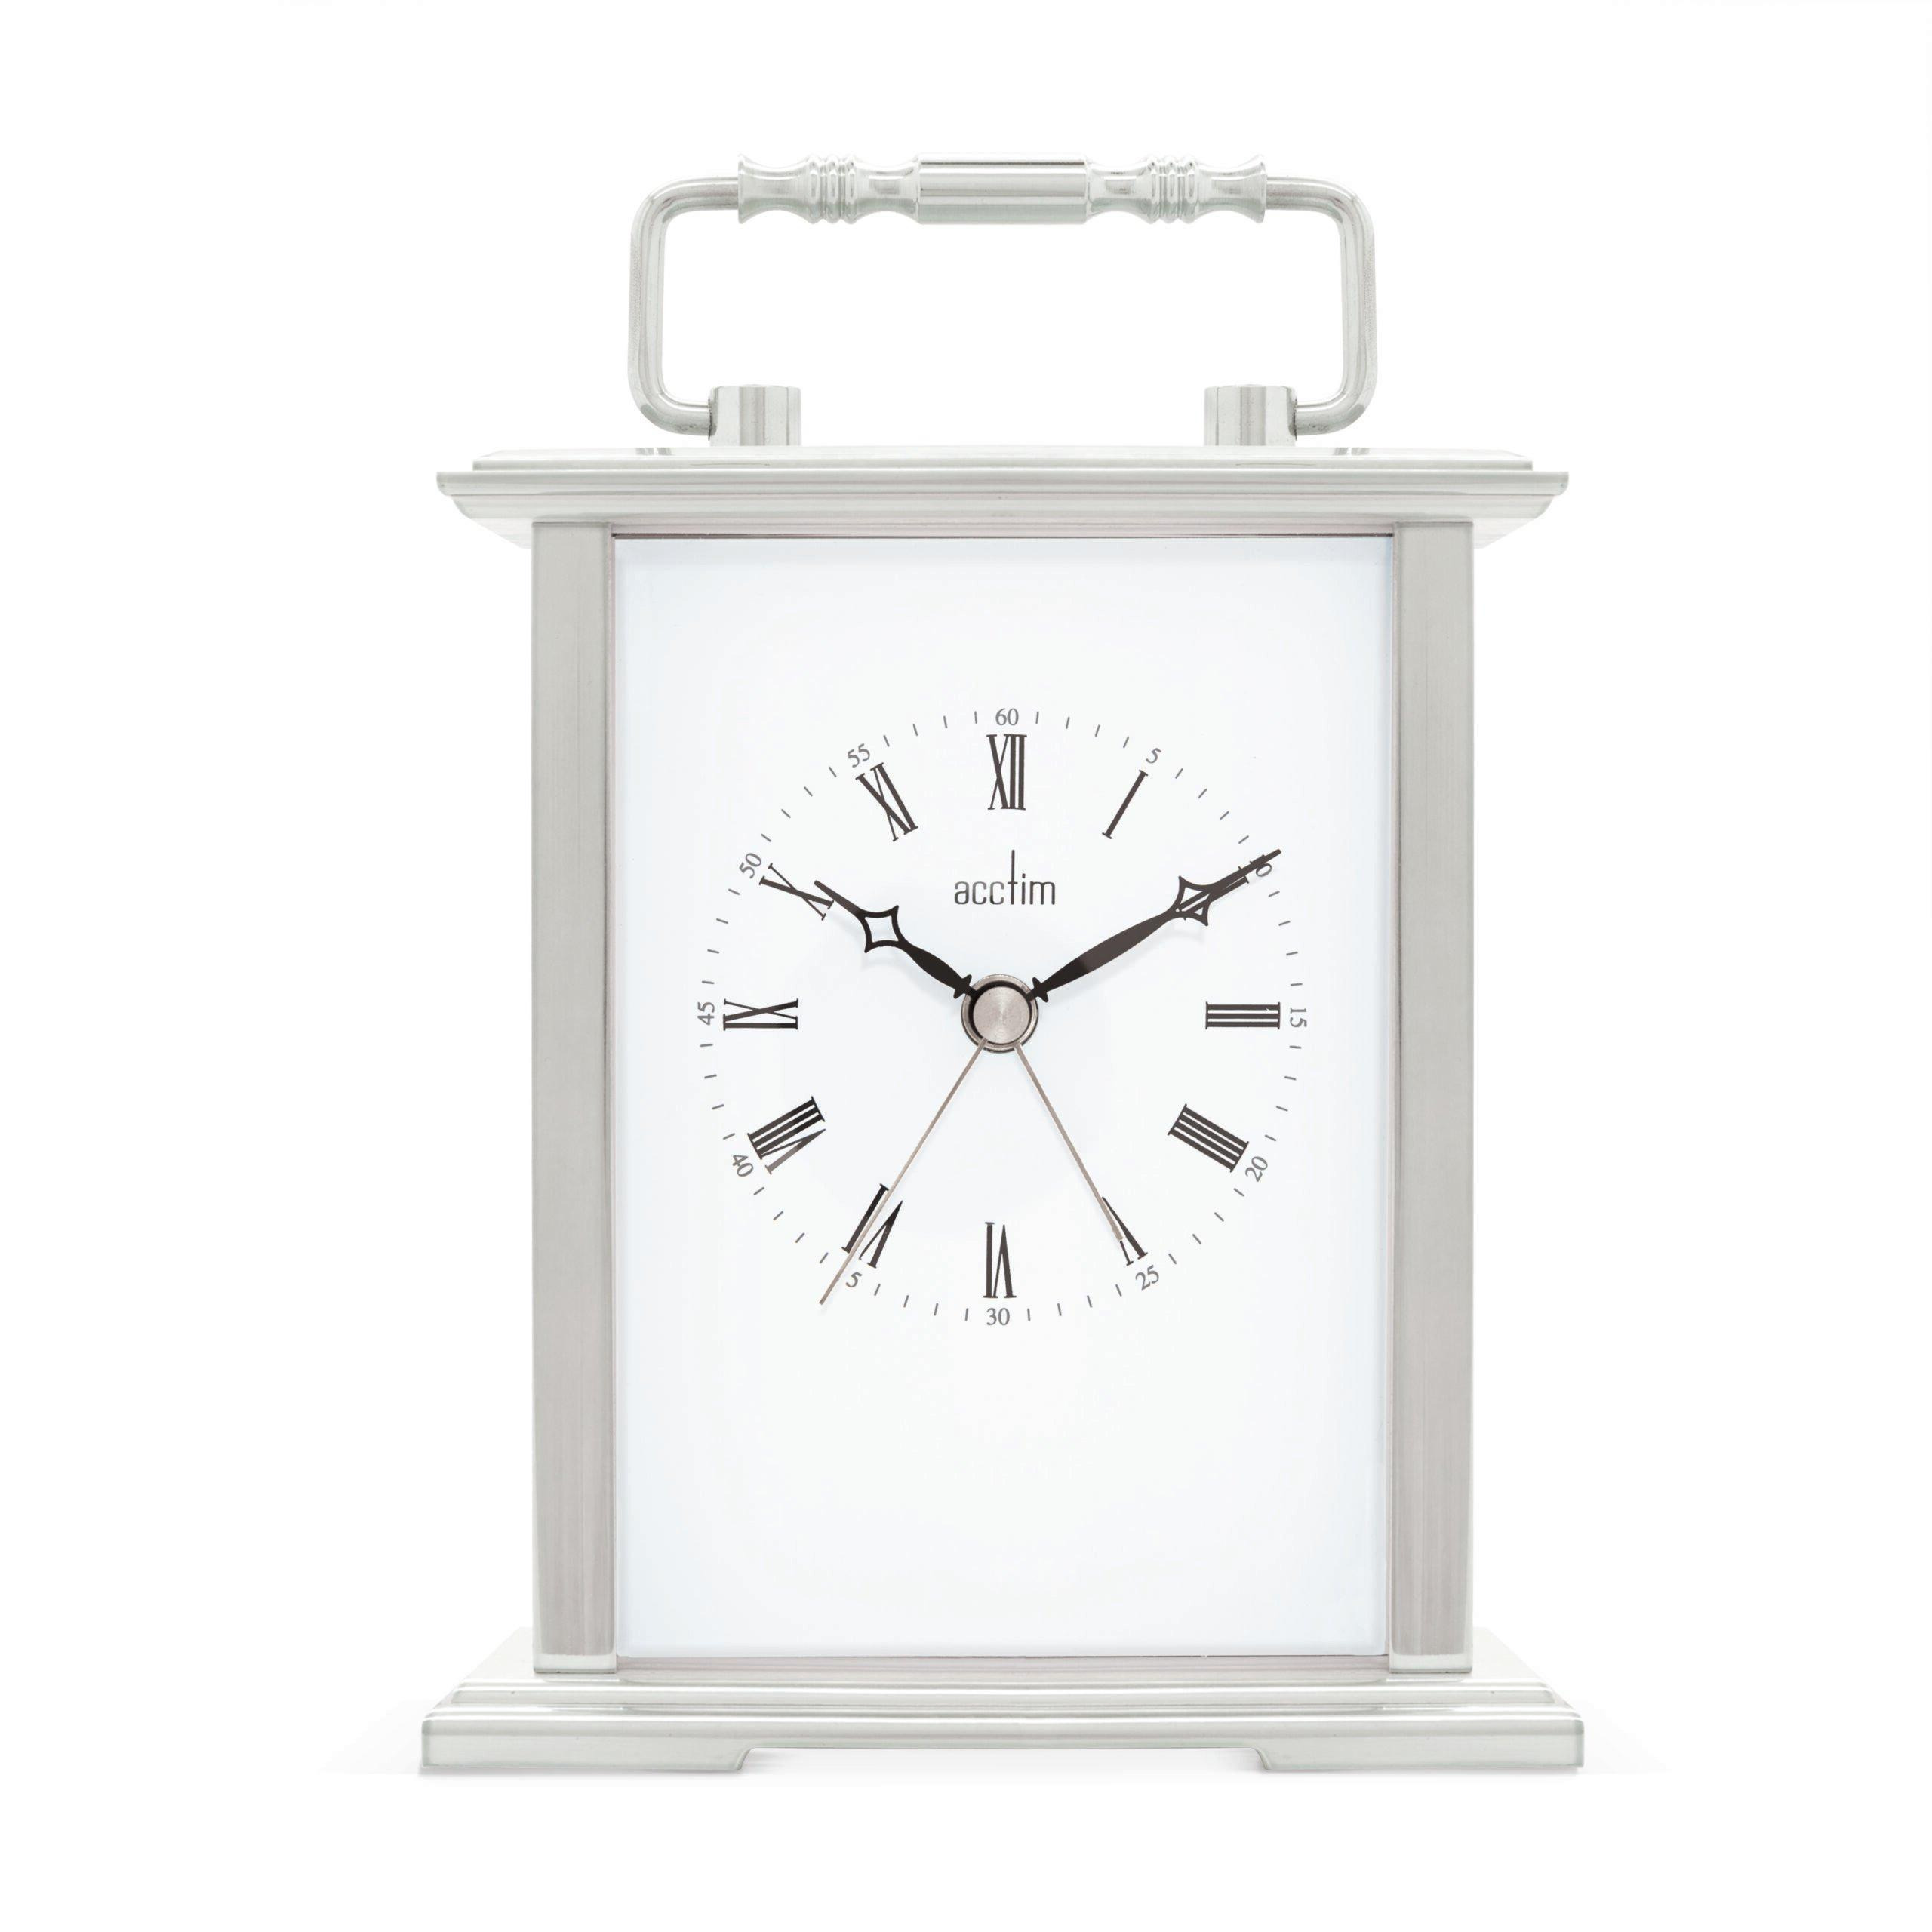 Gainsborough Mantel Clock Quartz Polished Metal Carriage Clock Energy Efficient Movement - image 1